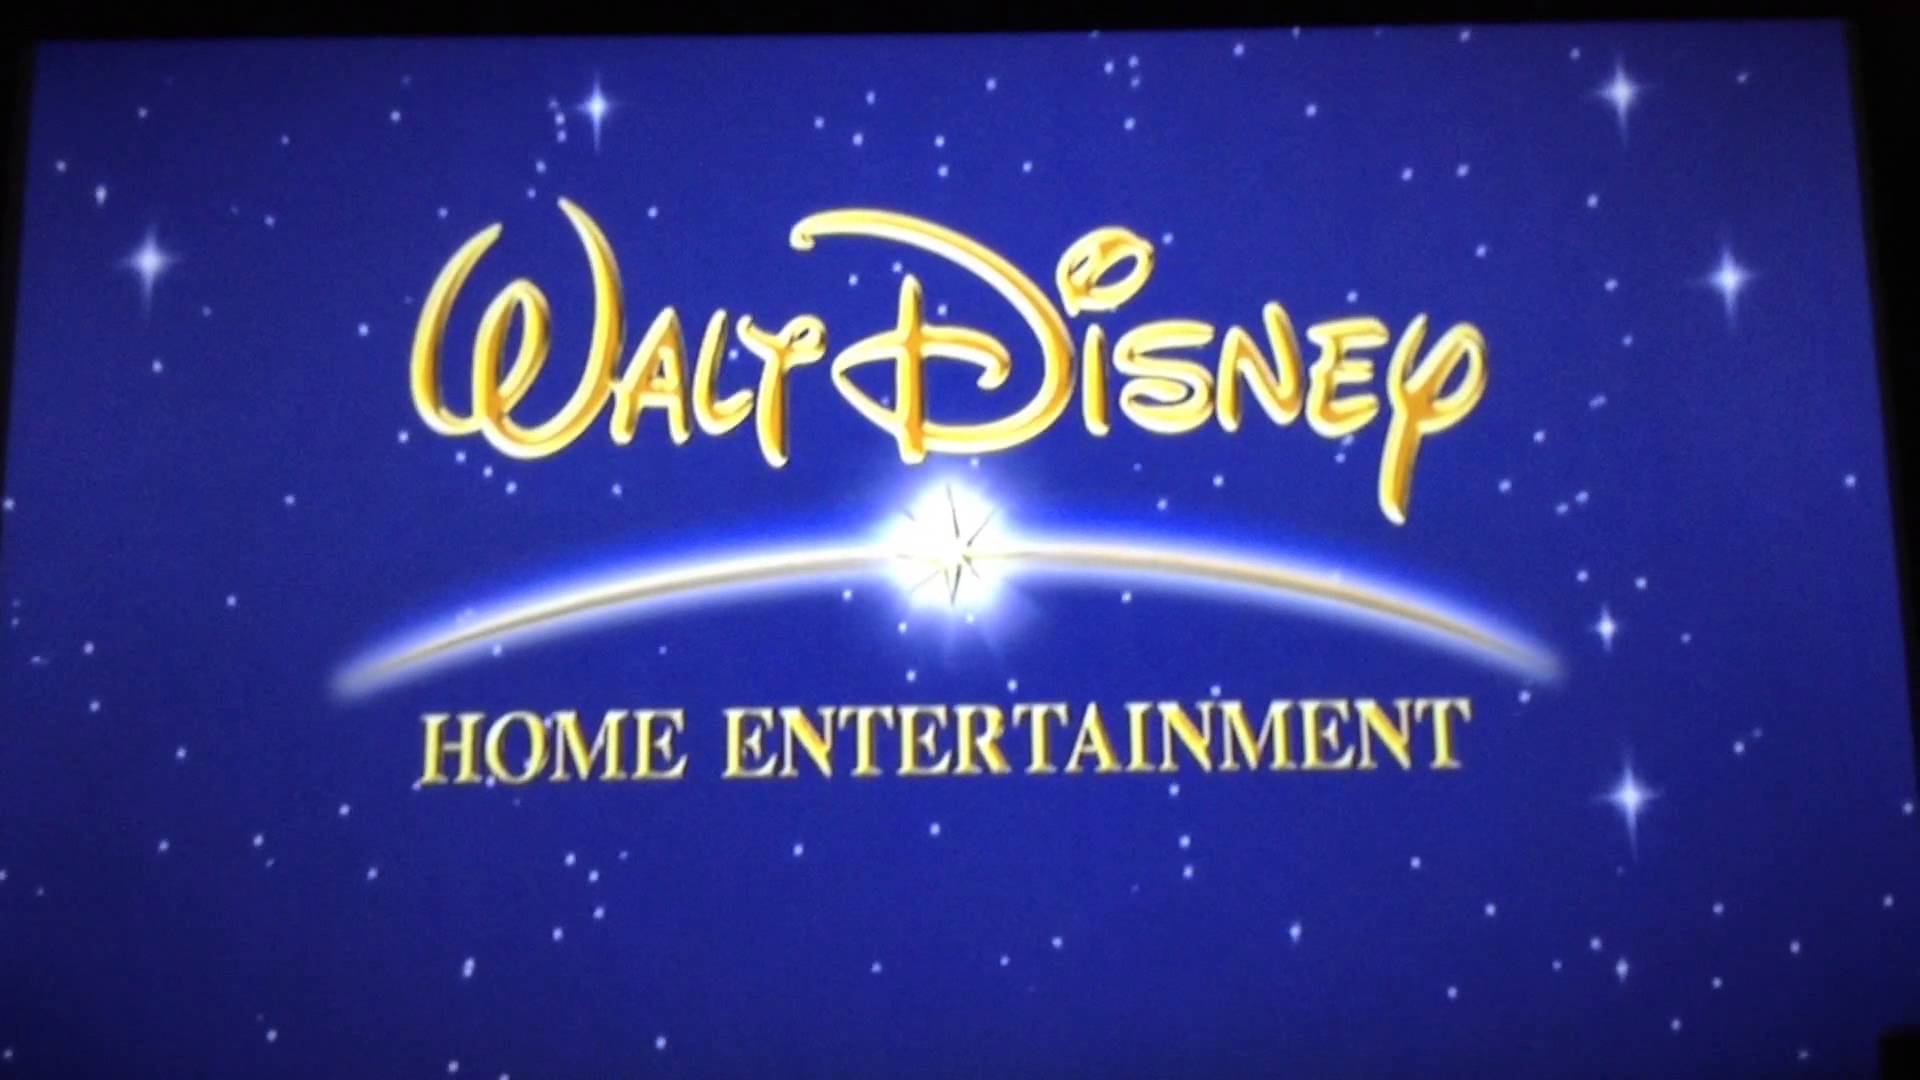 Walt Disney Home Entertainment Logo - Image - Walt Disney Home Entertainment Logo Blue Background.jpg ...